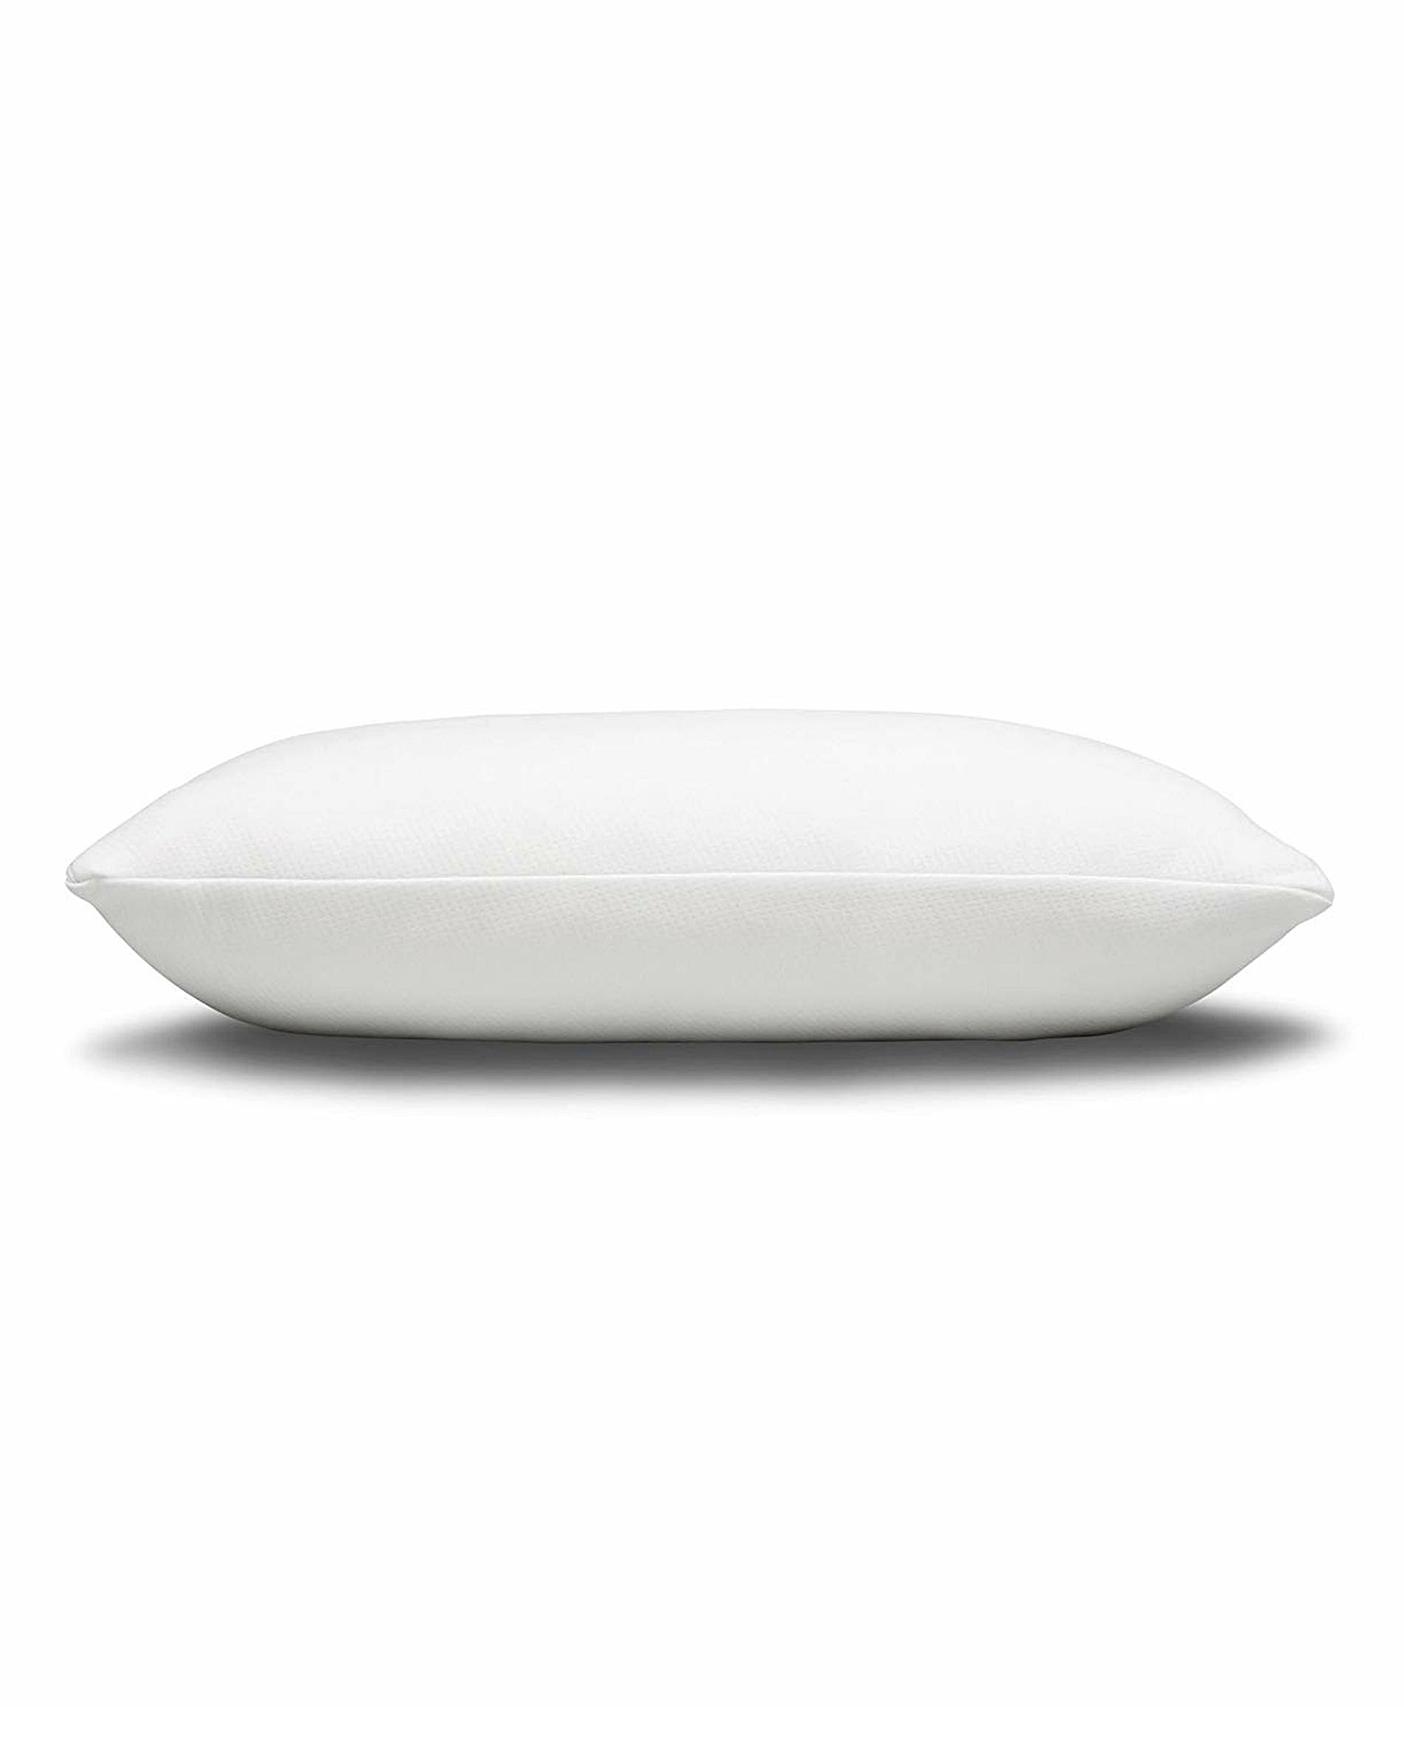 slumberdown memory foam pillow